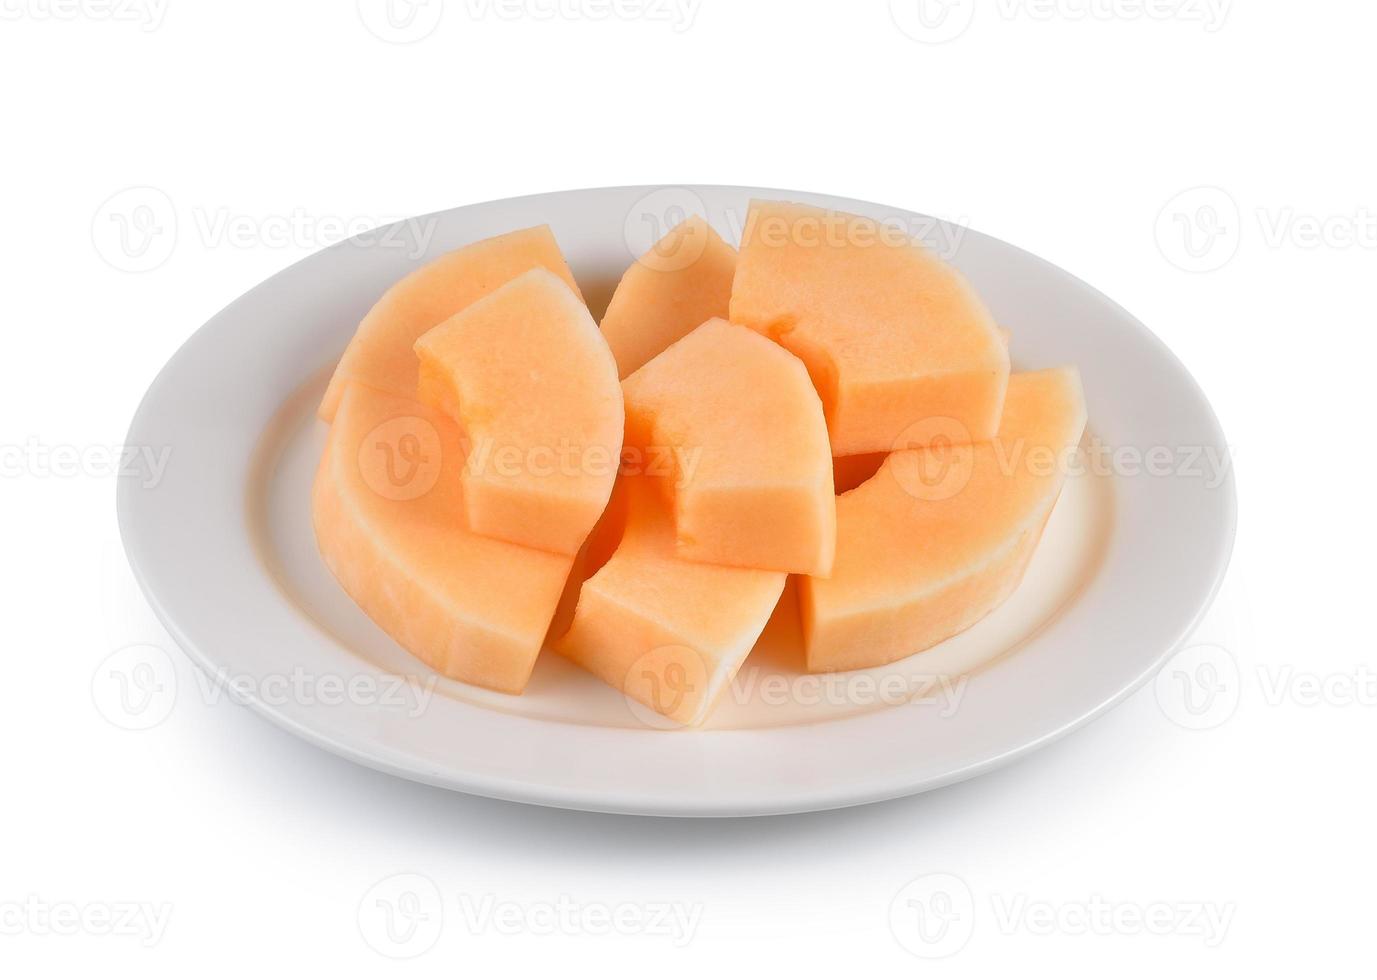 gesneden cantaloupe meloen op witte plaat op witte achtergrond foto